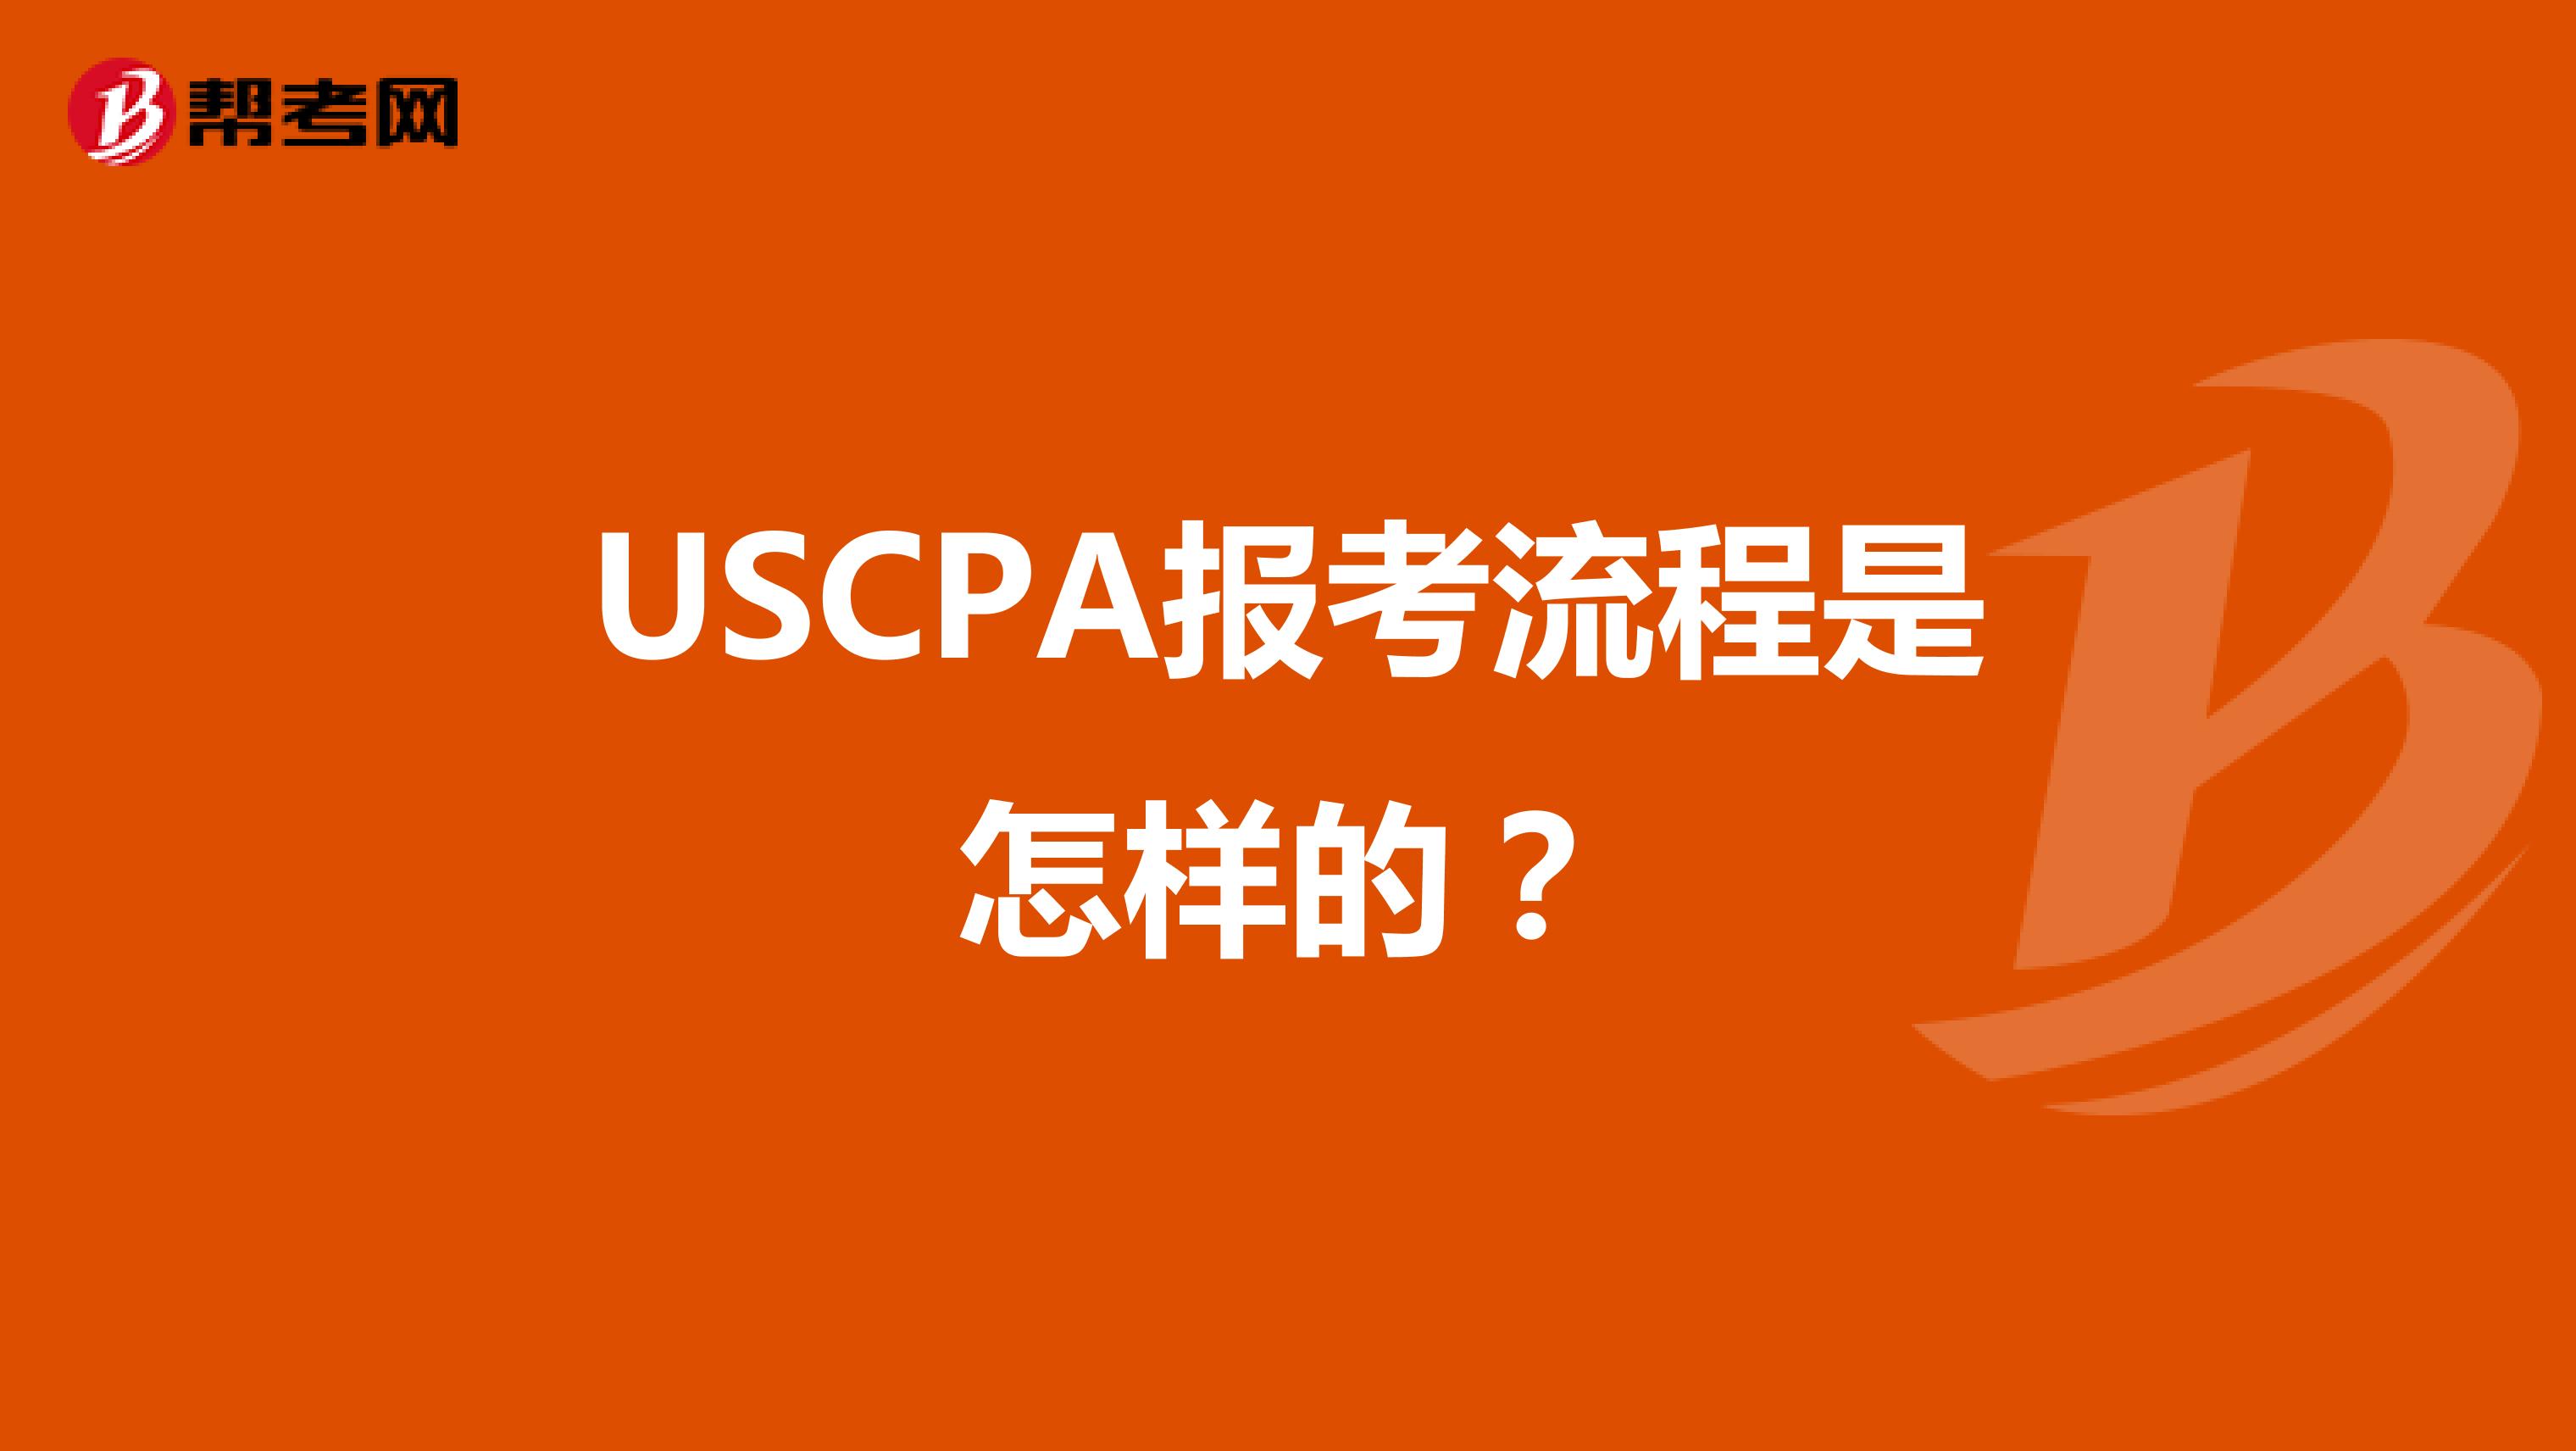 USCPA报考流程是怎样的？